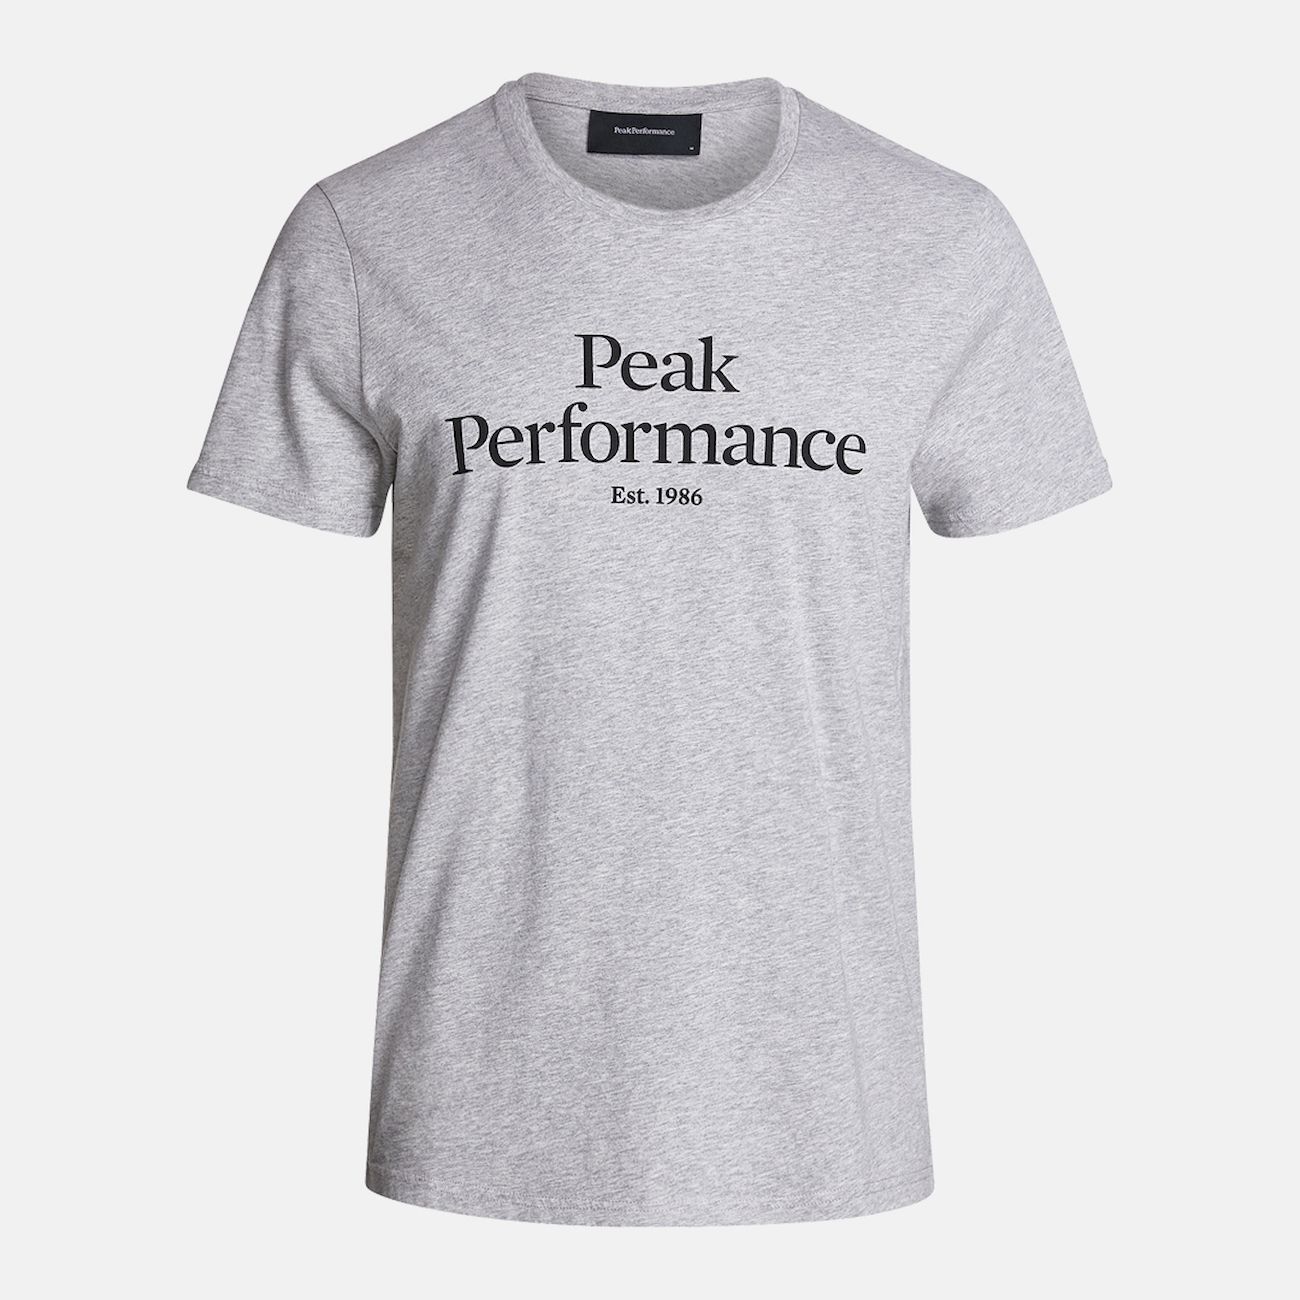 Peak Performance Original Tee - T-shirt - Heren